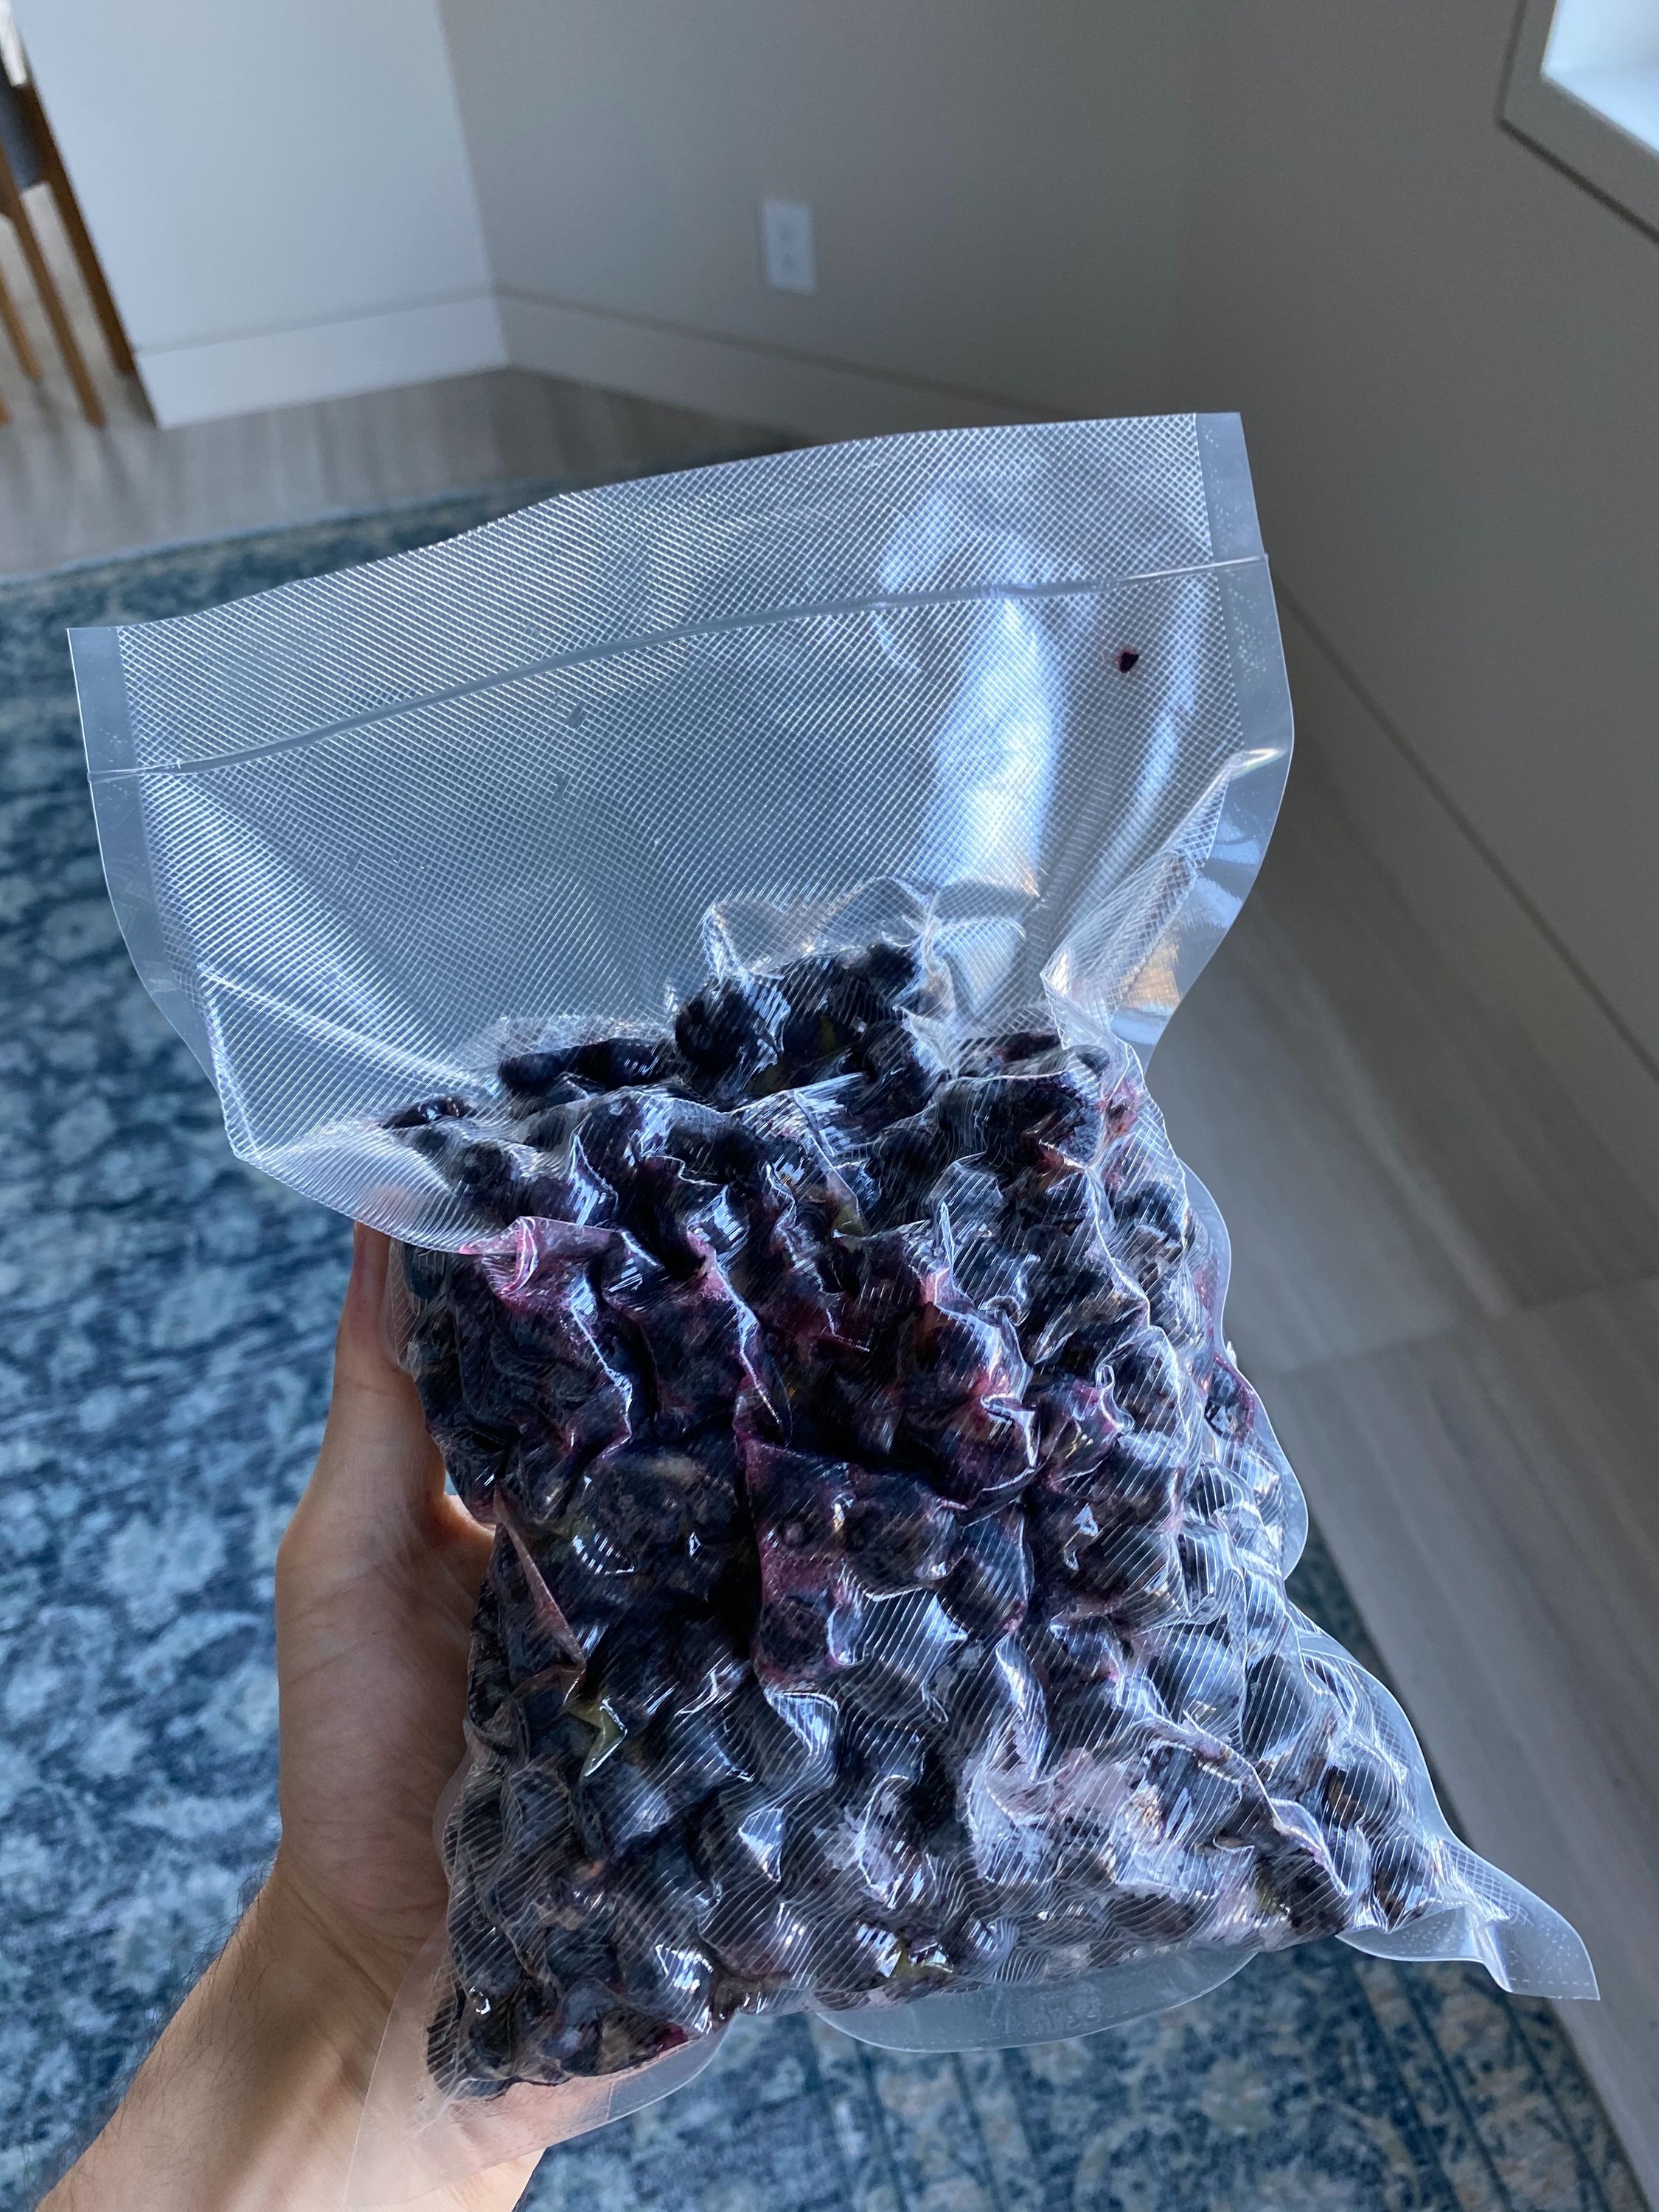 A vacuum-sealed bag of blueberries